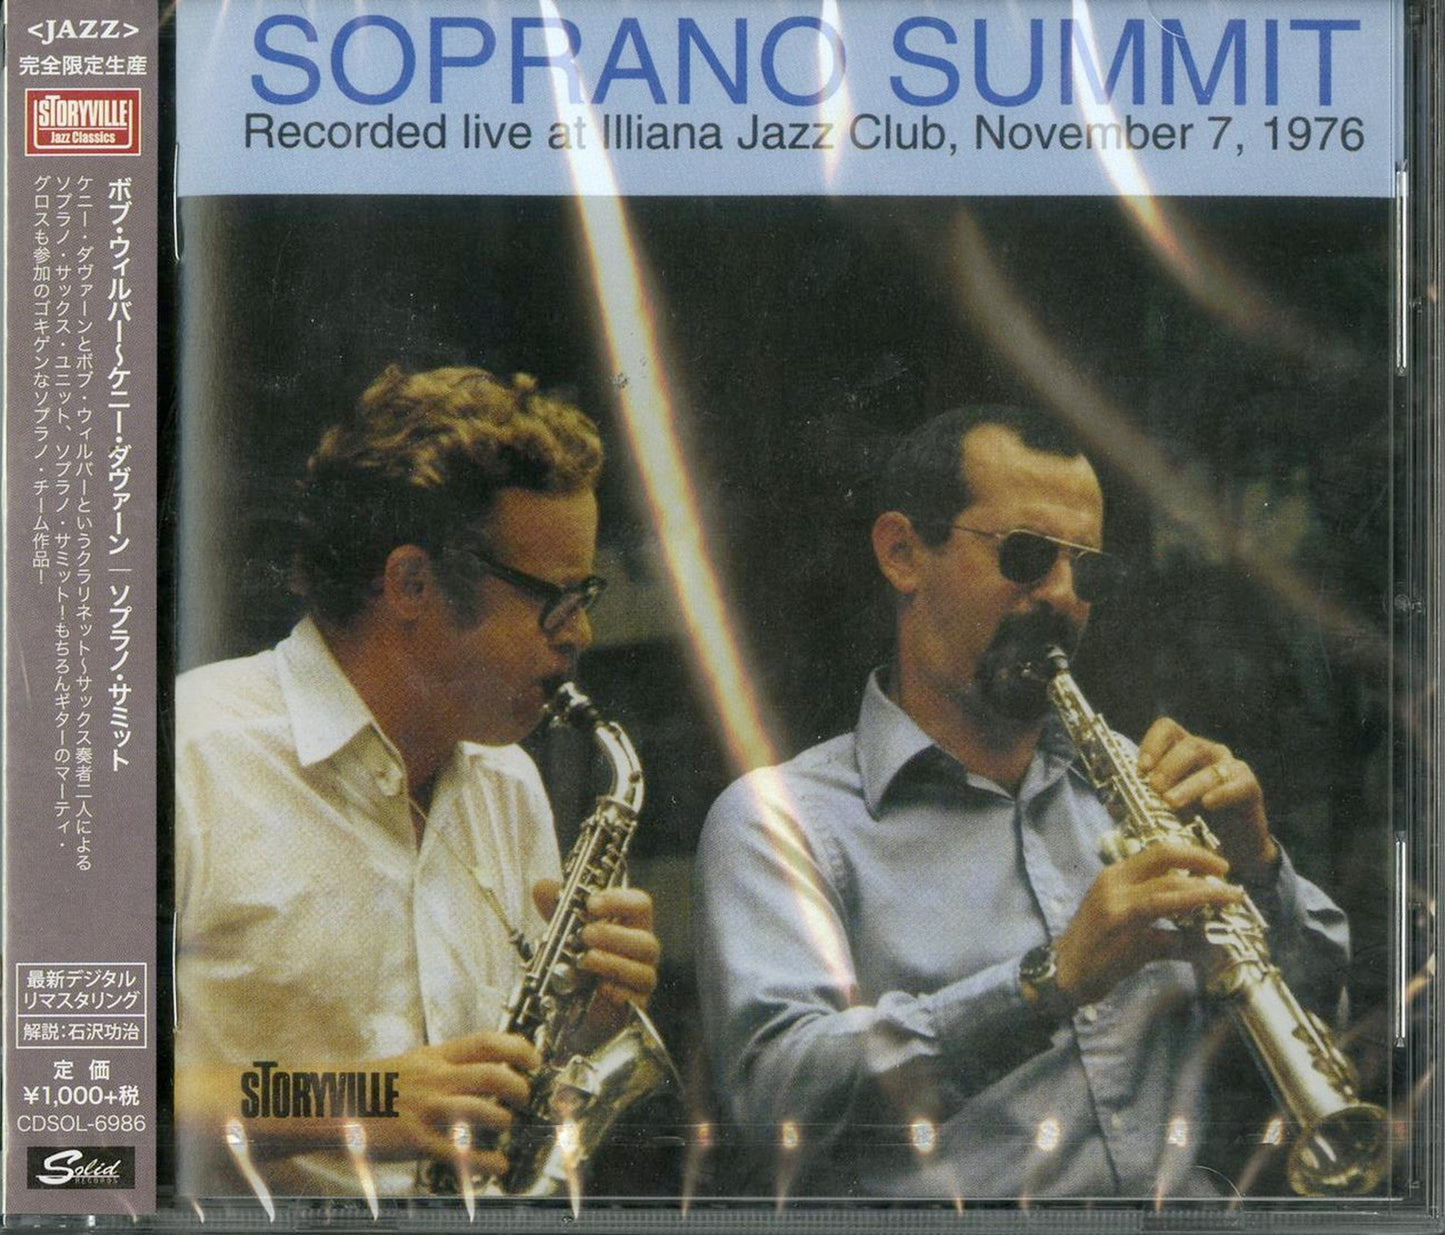 Kenny Davern & Bob Wilber - Soprano Summit - Japan  CD Limited Edition